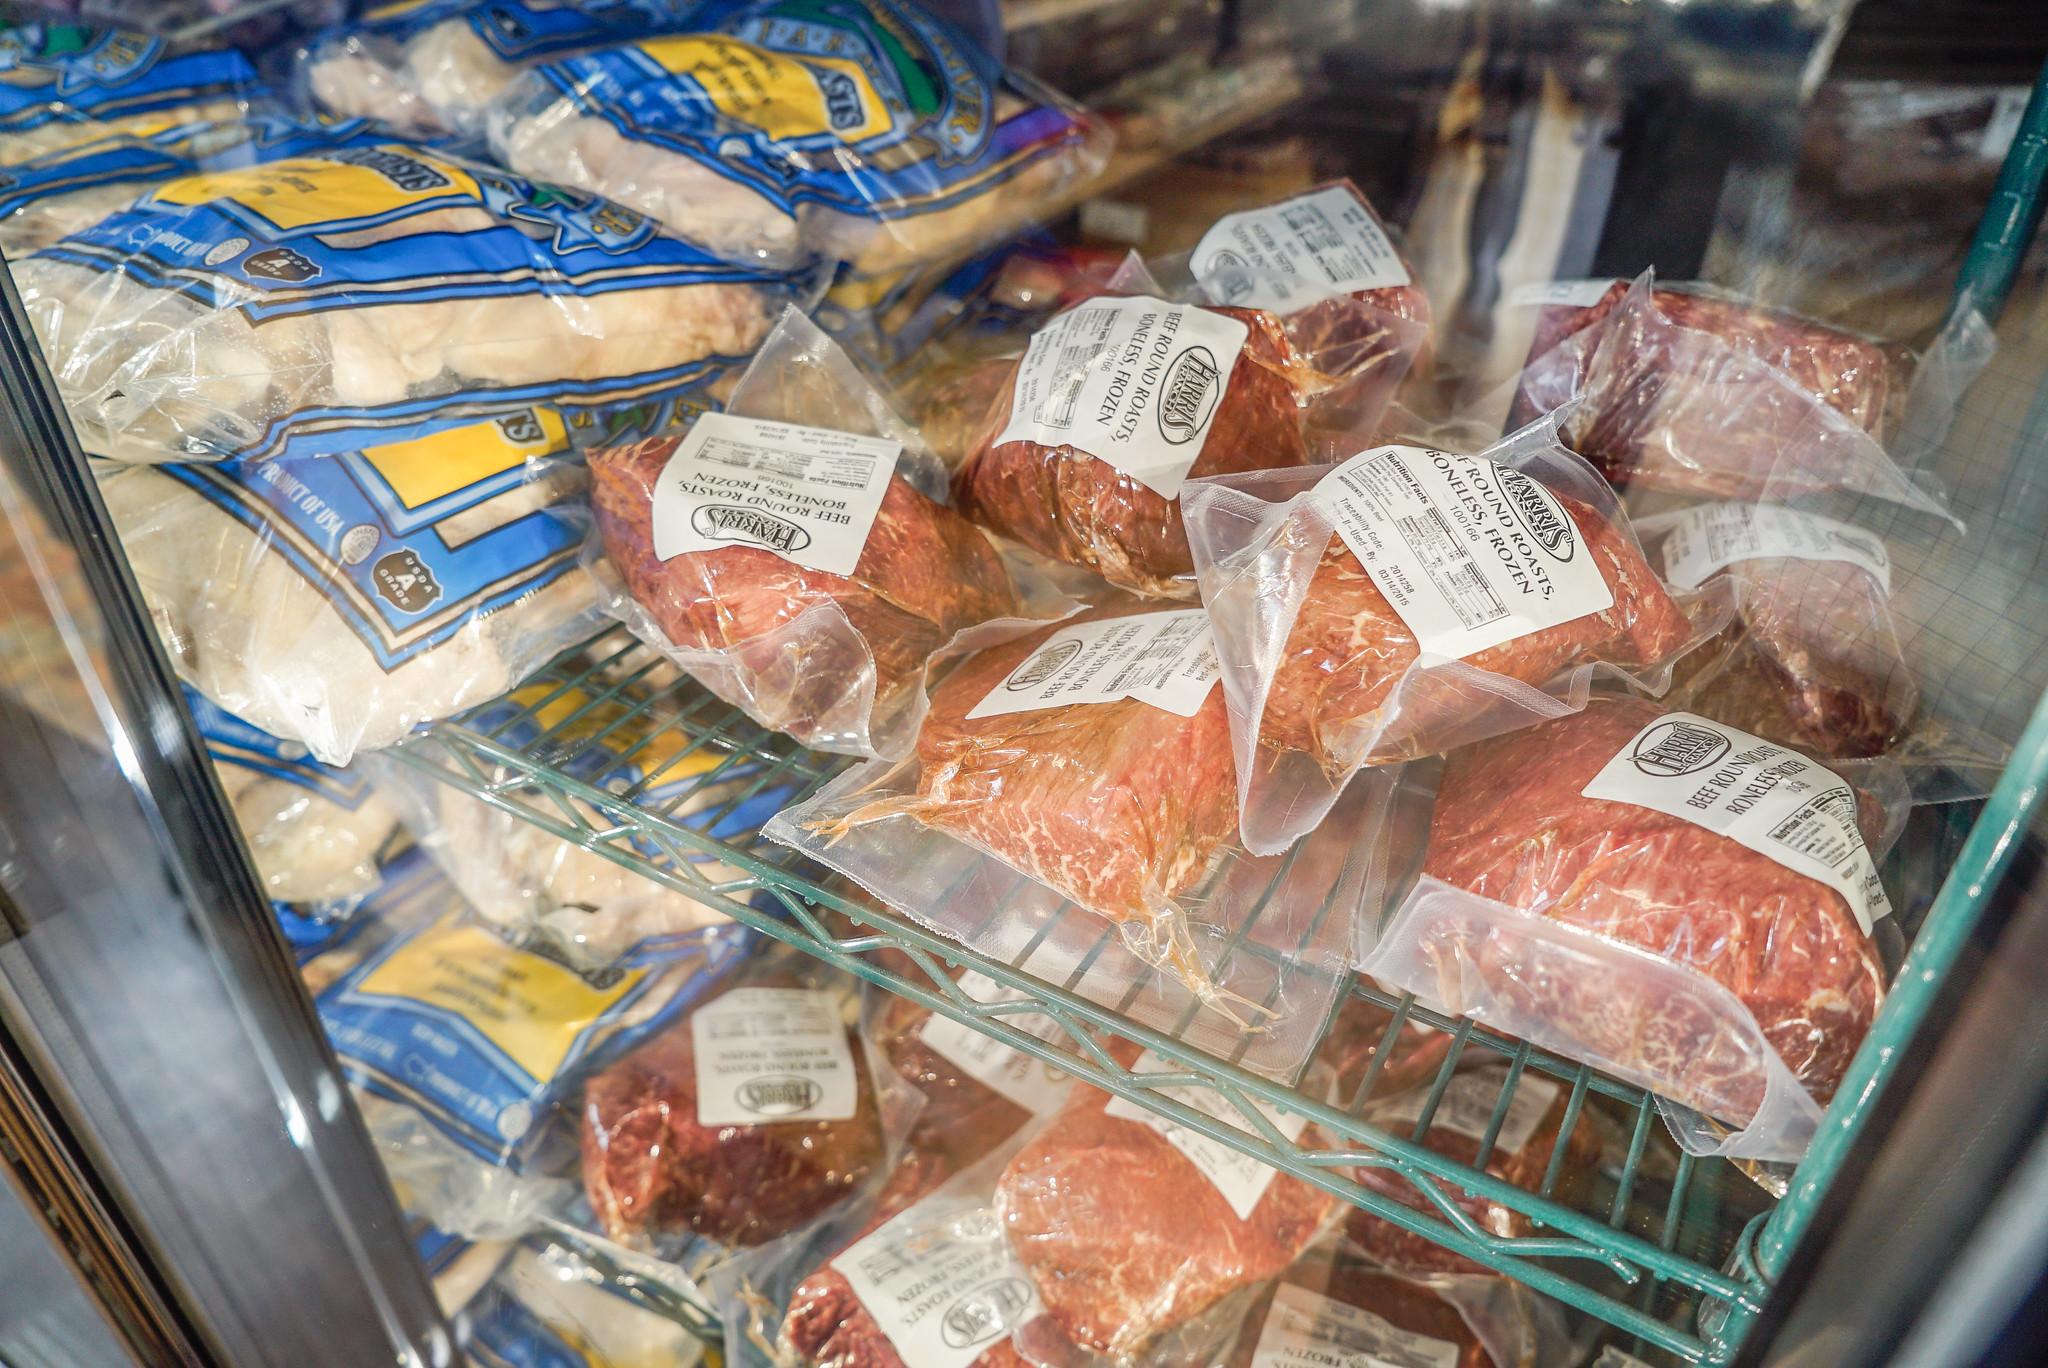 Frozen meat, Picture credit: USDA.gov